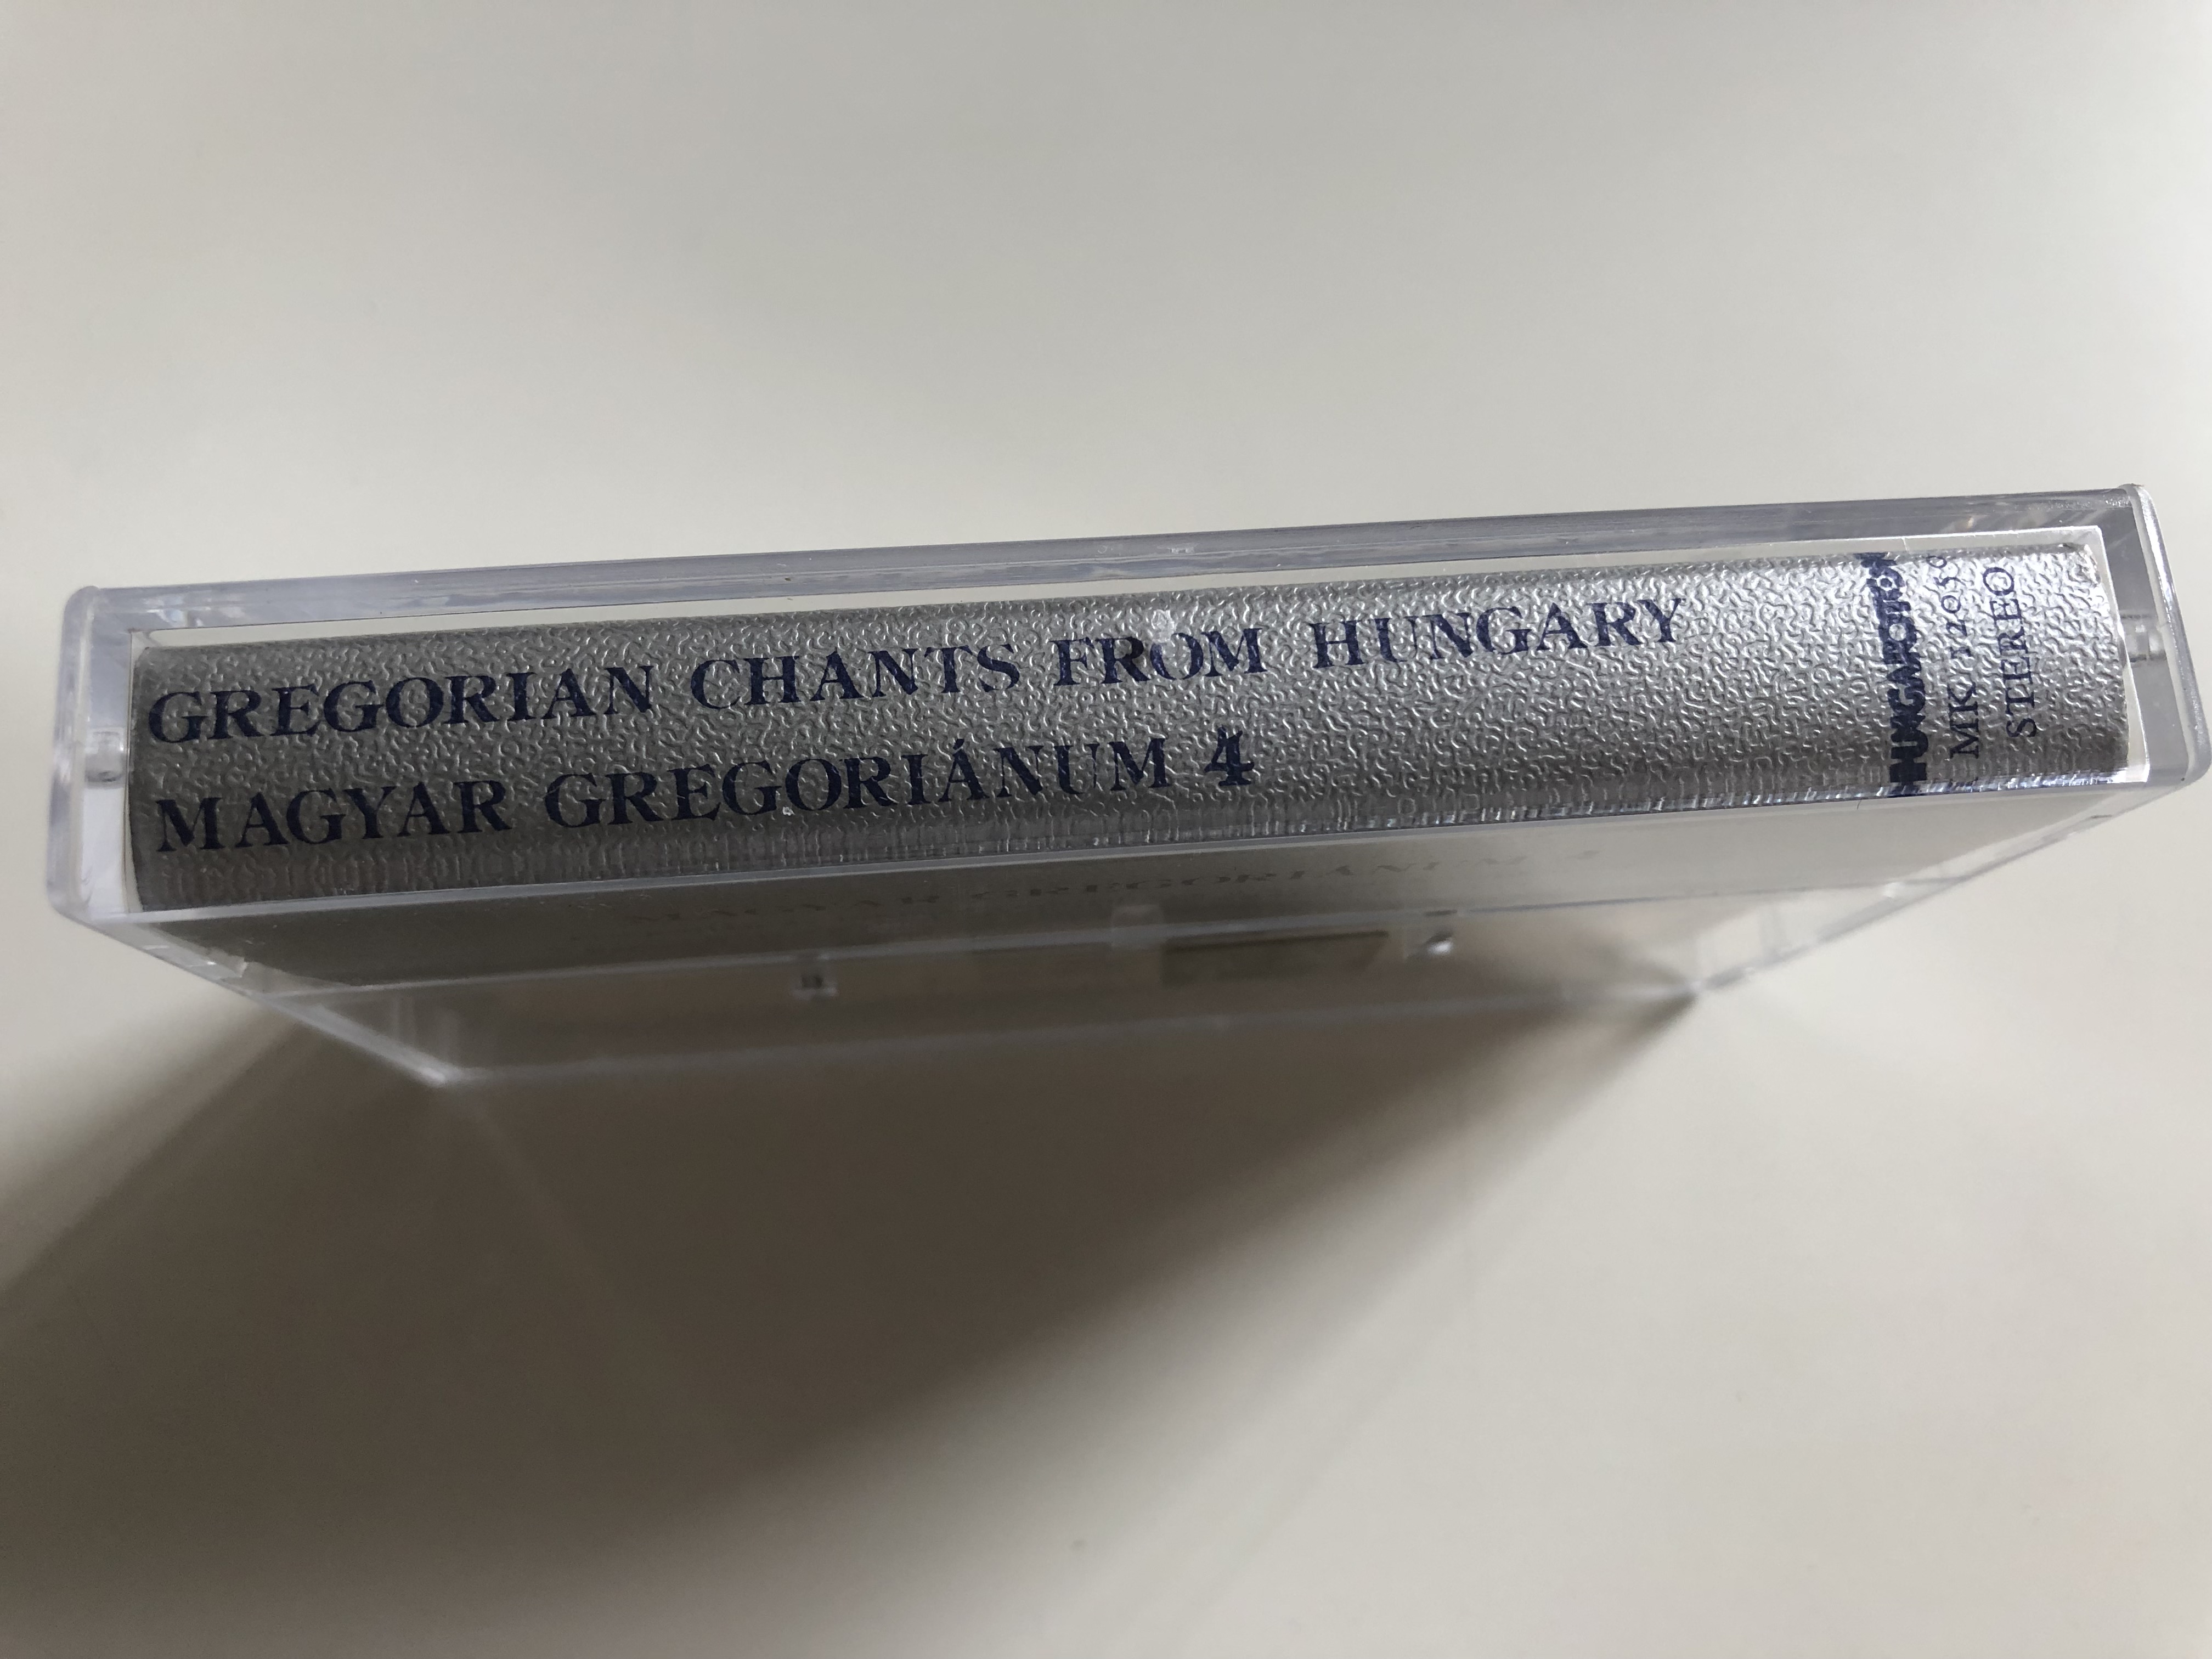 magyar-gregori-num-4-gregorian-chants-from-hungary-schola-hungarica-hungaroton-cassette-stereo-mk-12050-4-.jpg